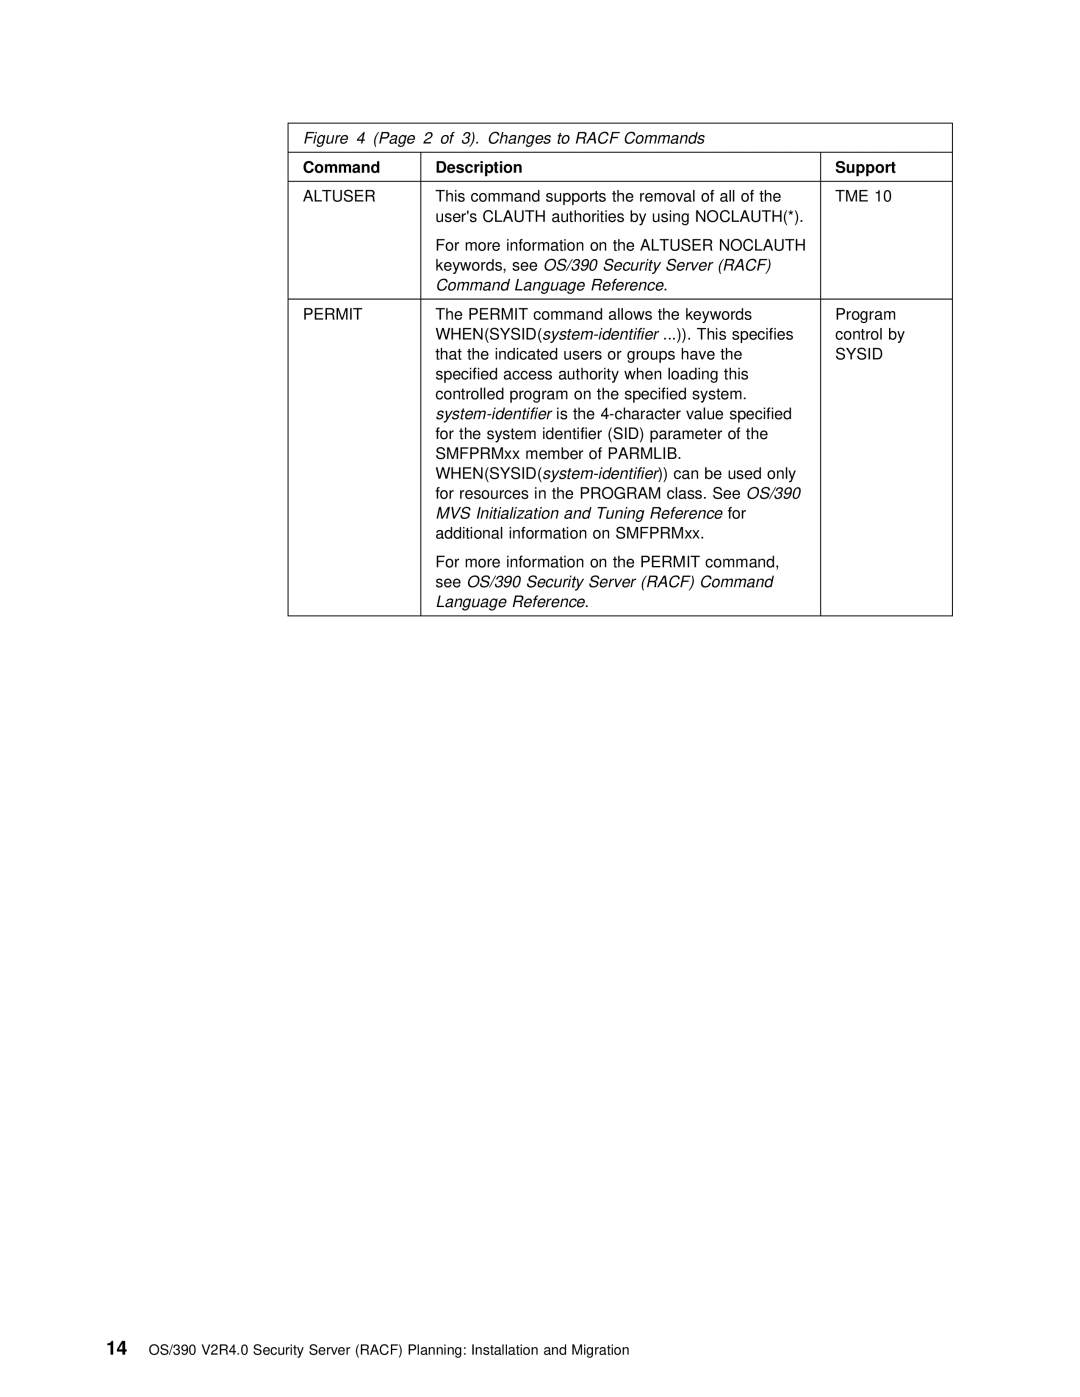 IBM OS/390 manual Noclauth, Permit, Parmlib 